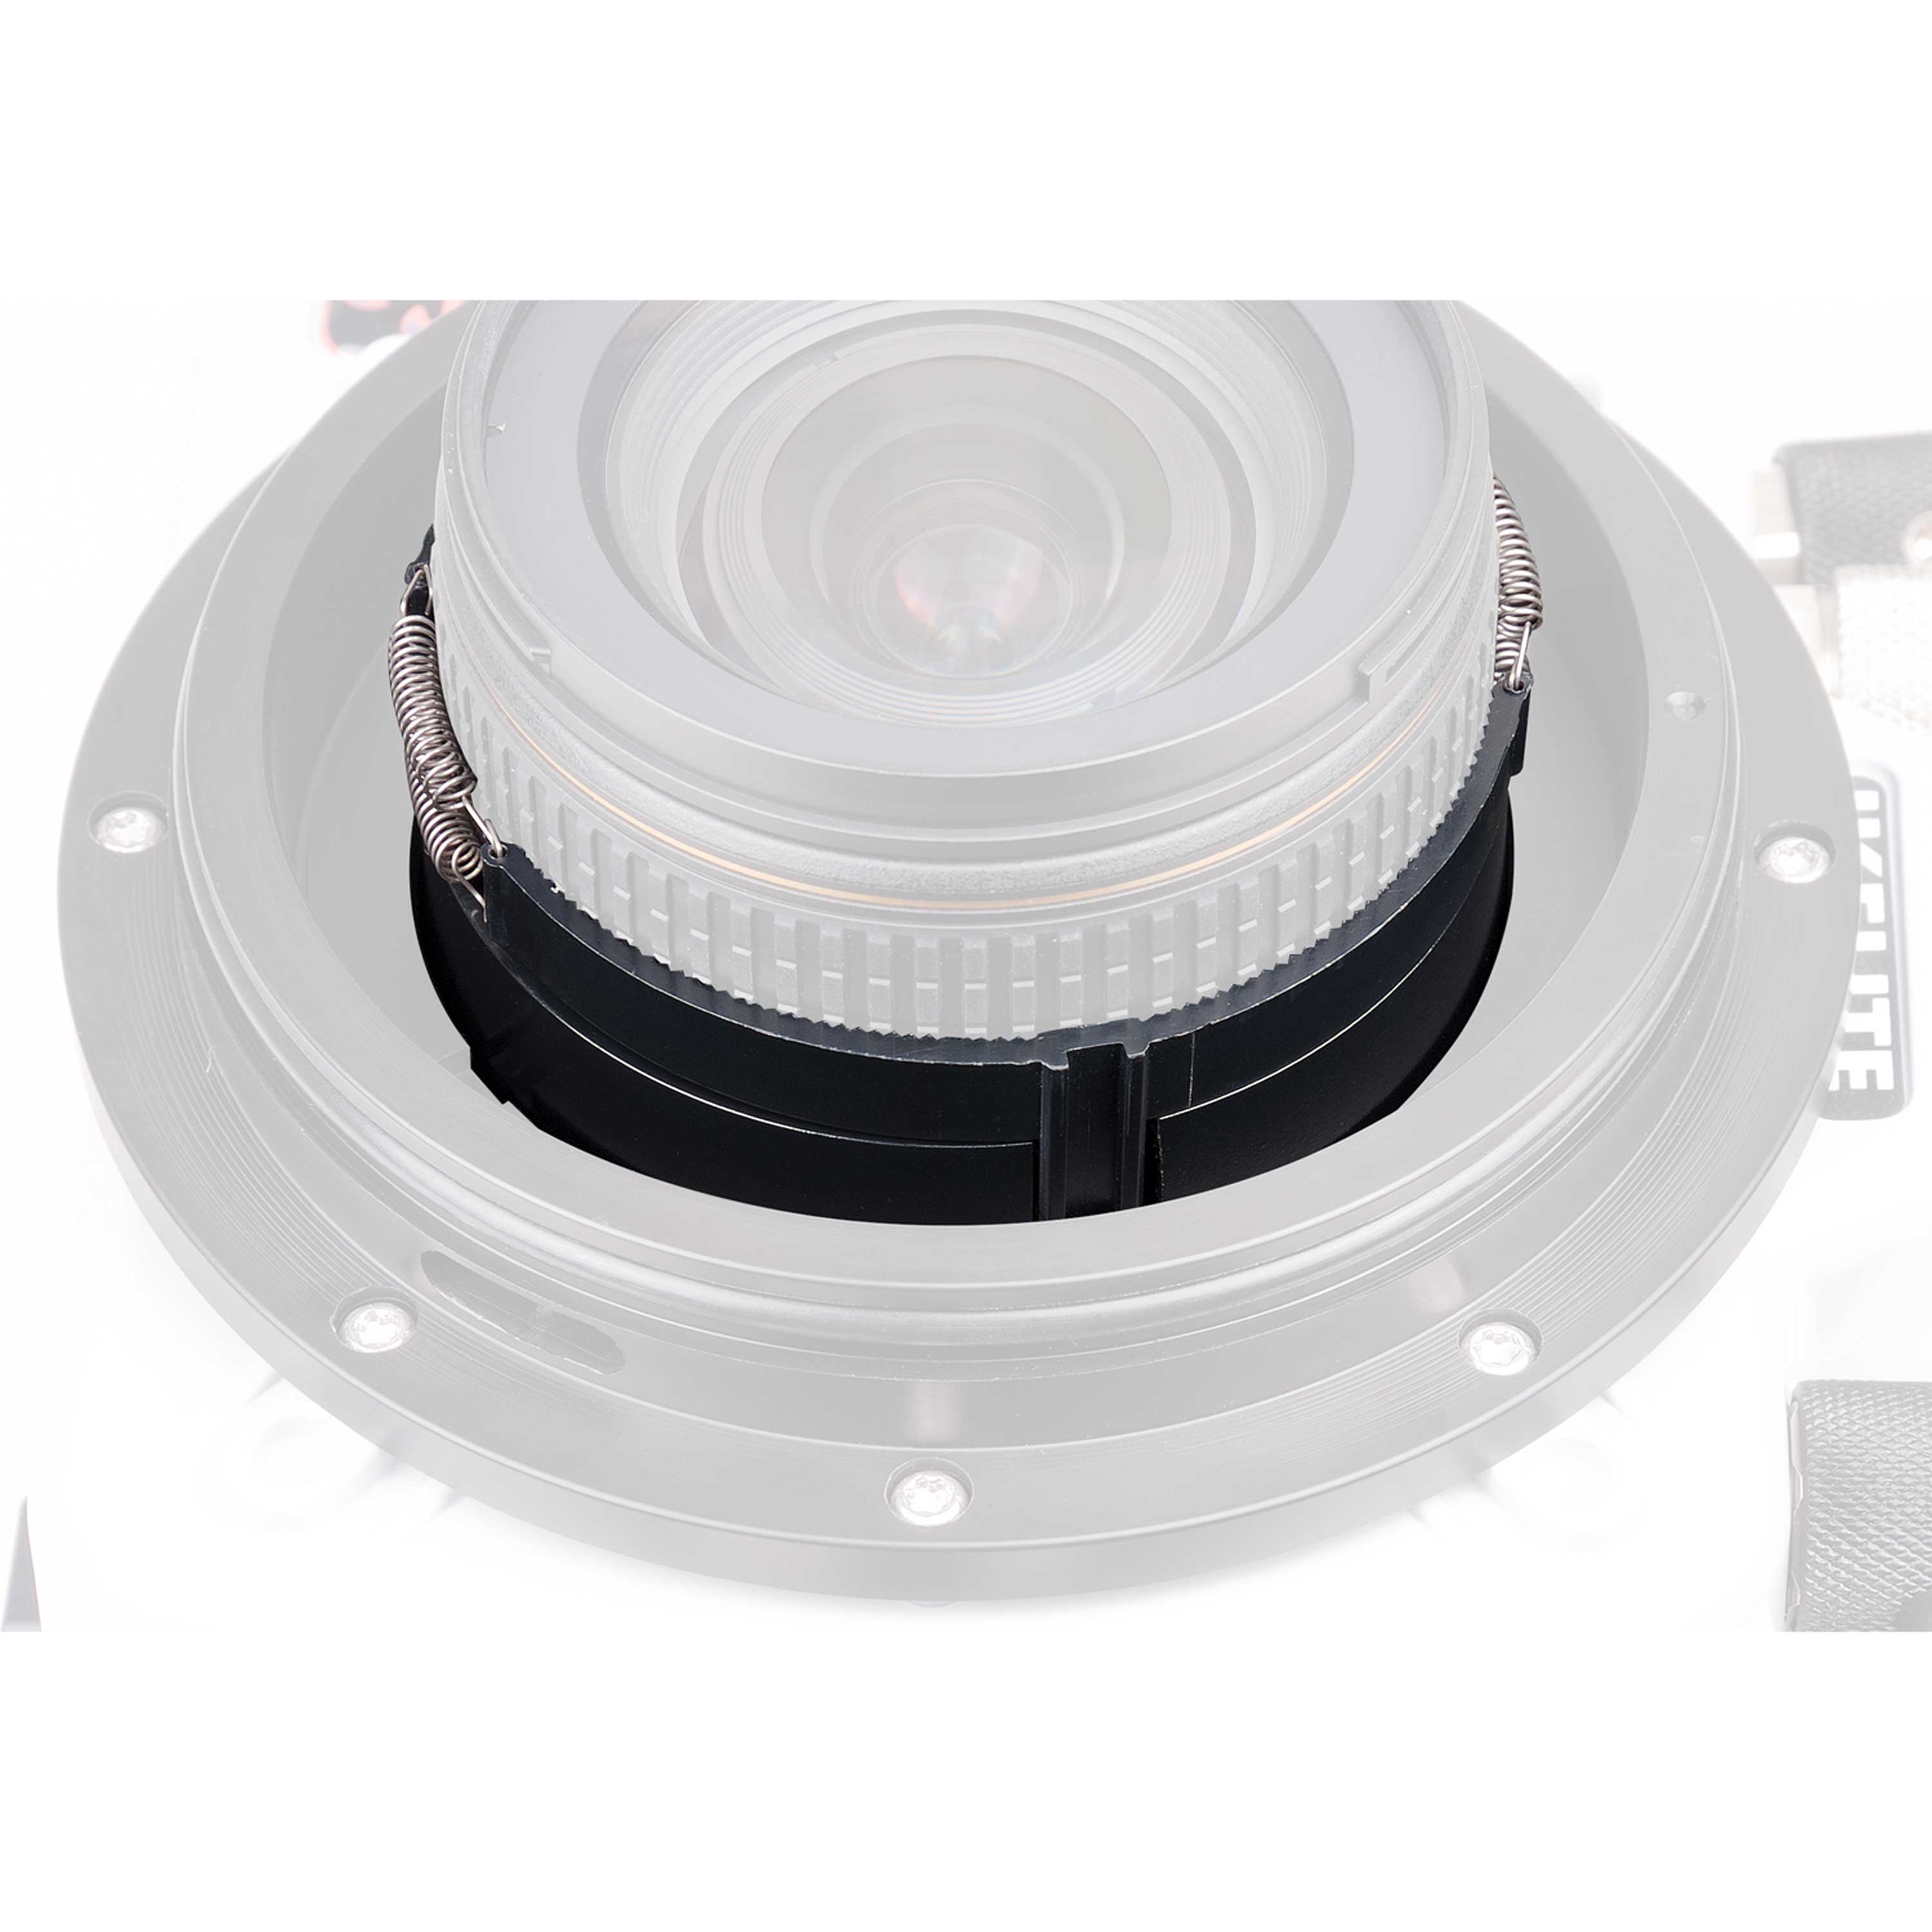 Zoom Gear for Nikon 16-80mm Lens